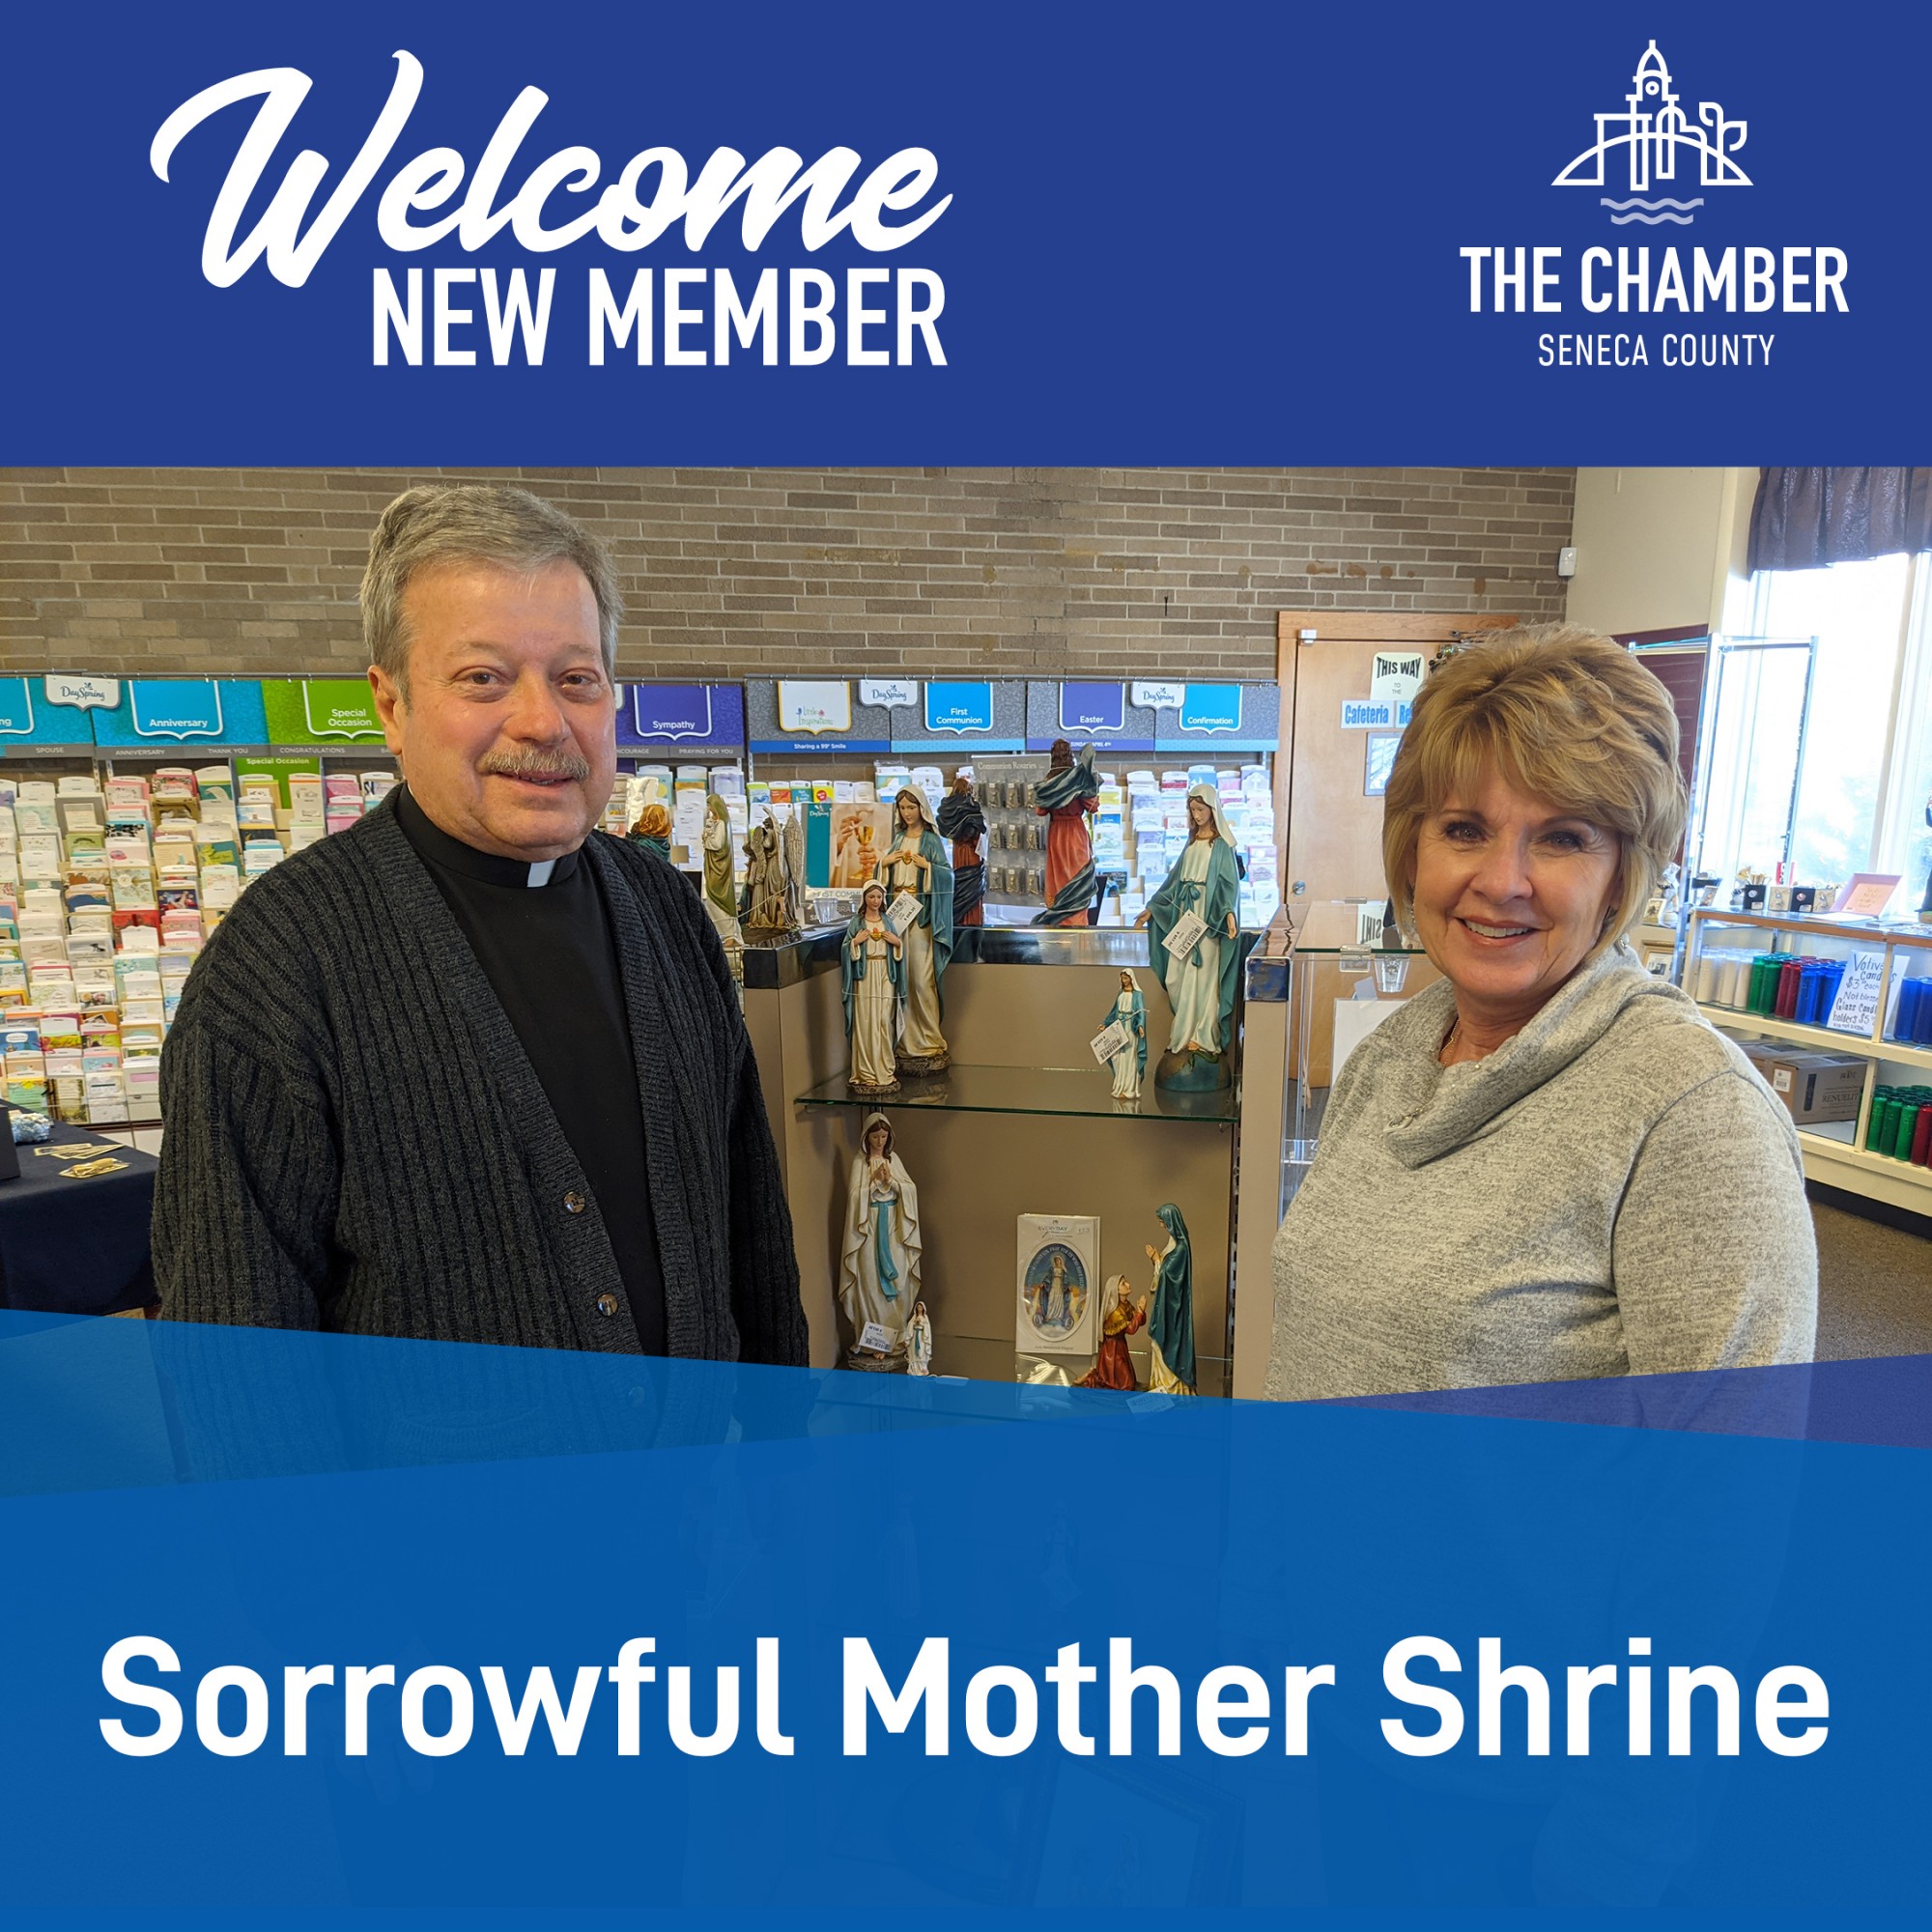 New Member:  The Sorrowful Mother Shrine